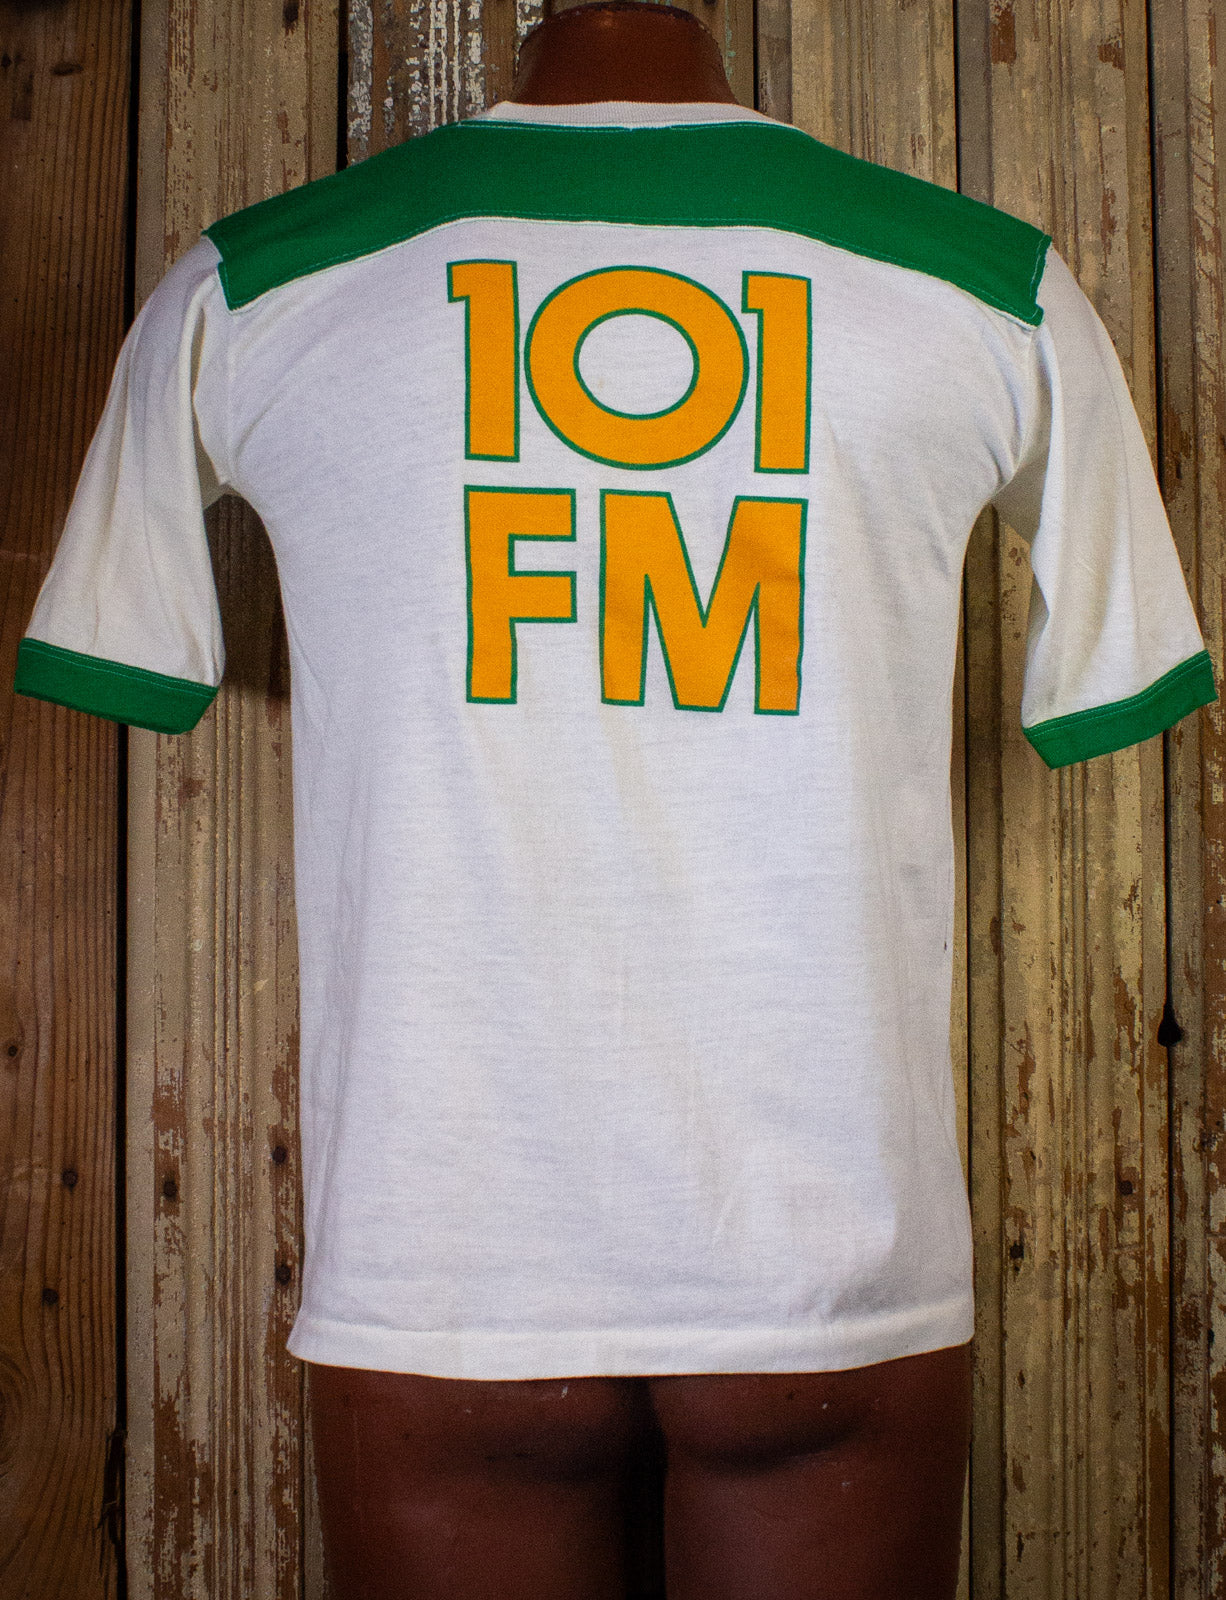 Vintage K Earth 101 FM Graphic T Shirt Ringer Green Medium 